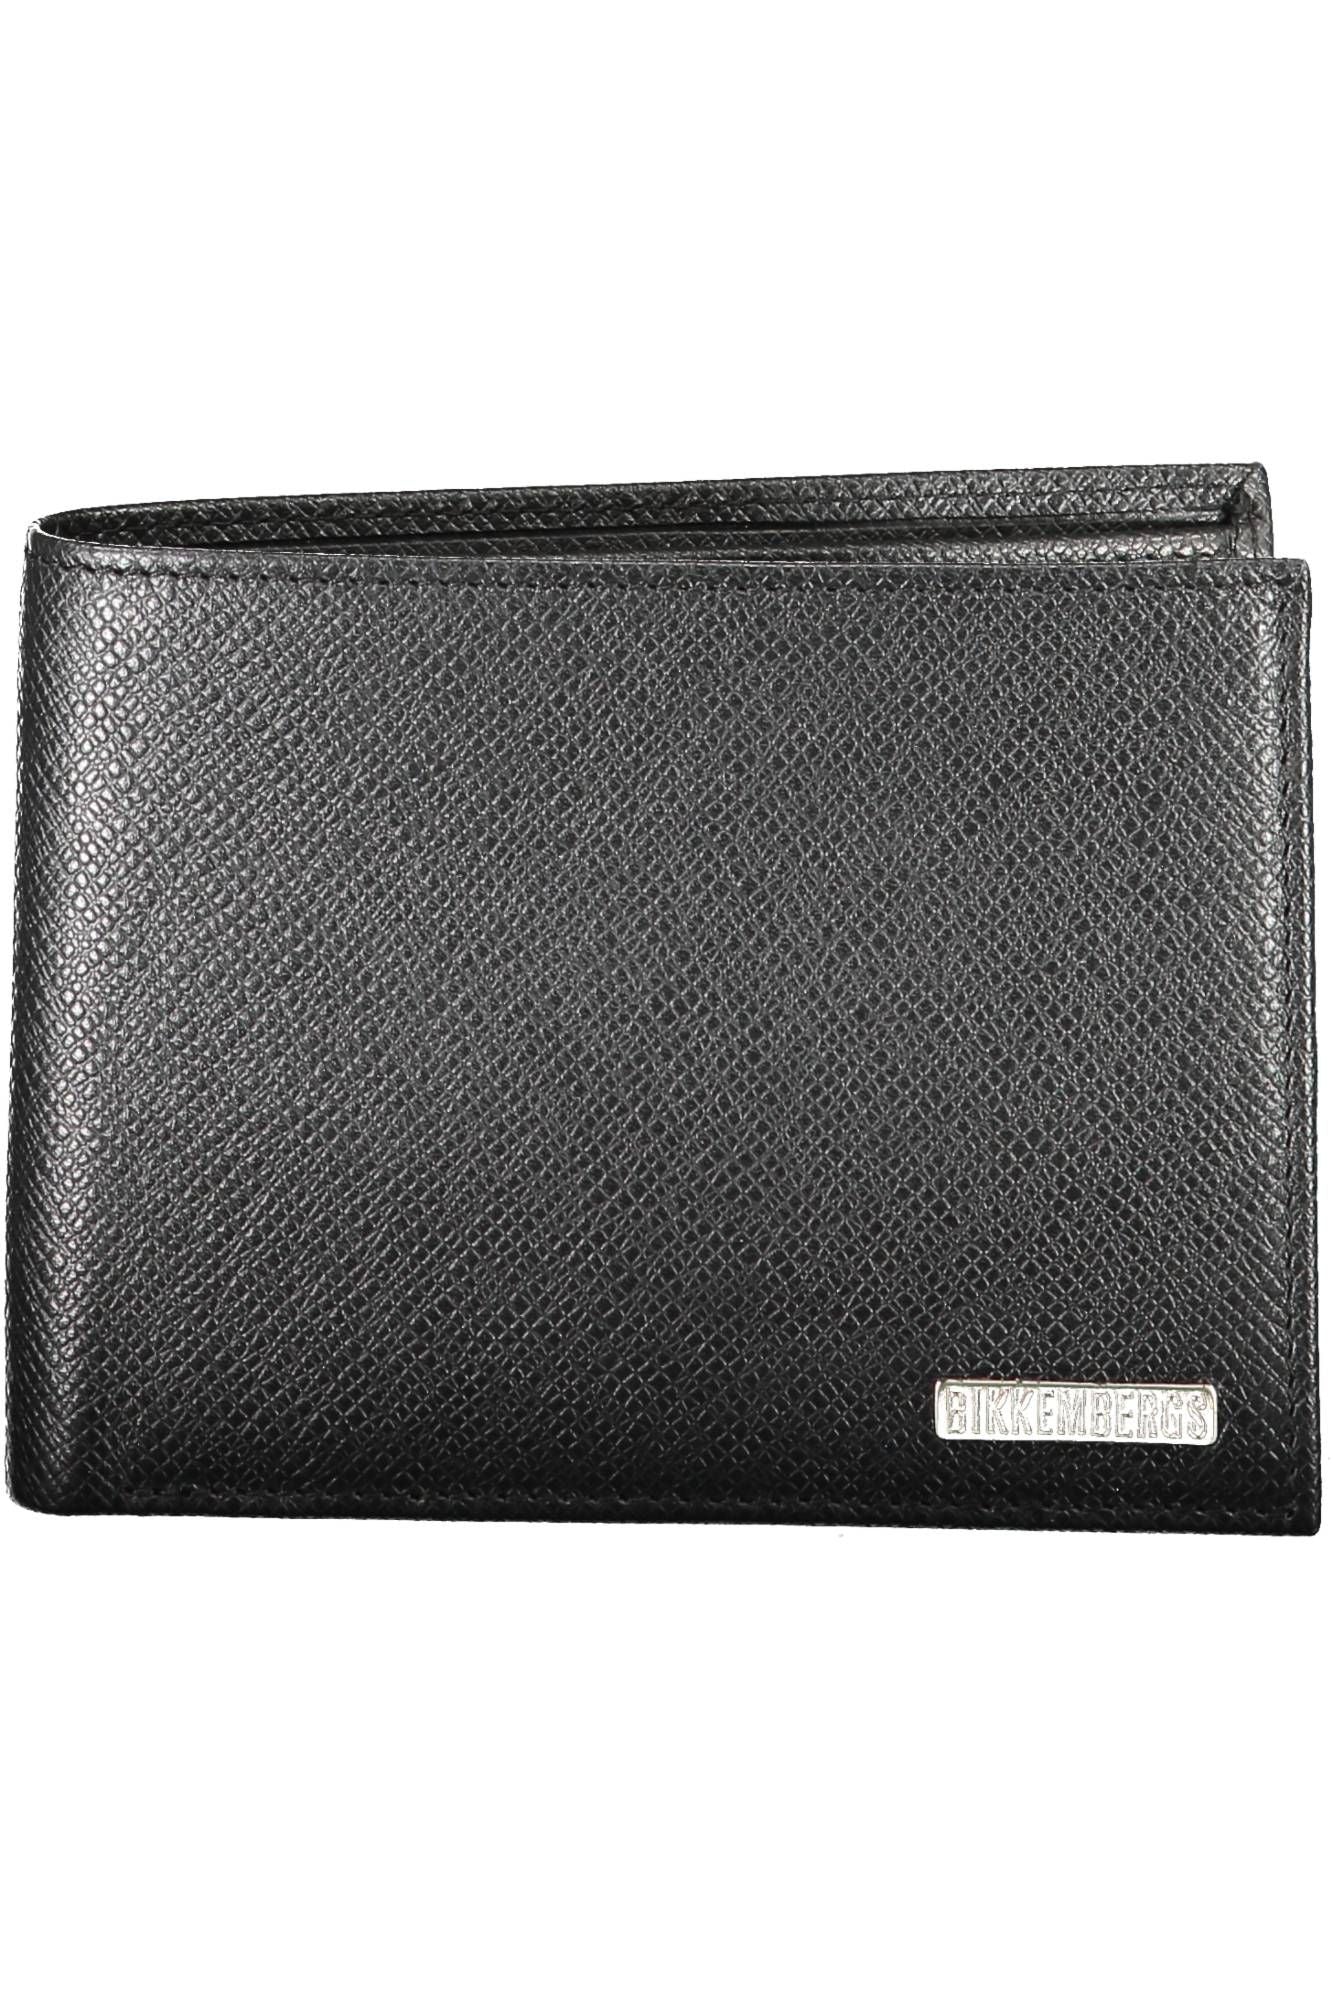 Bikkembergs Black Leather Wallet